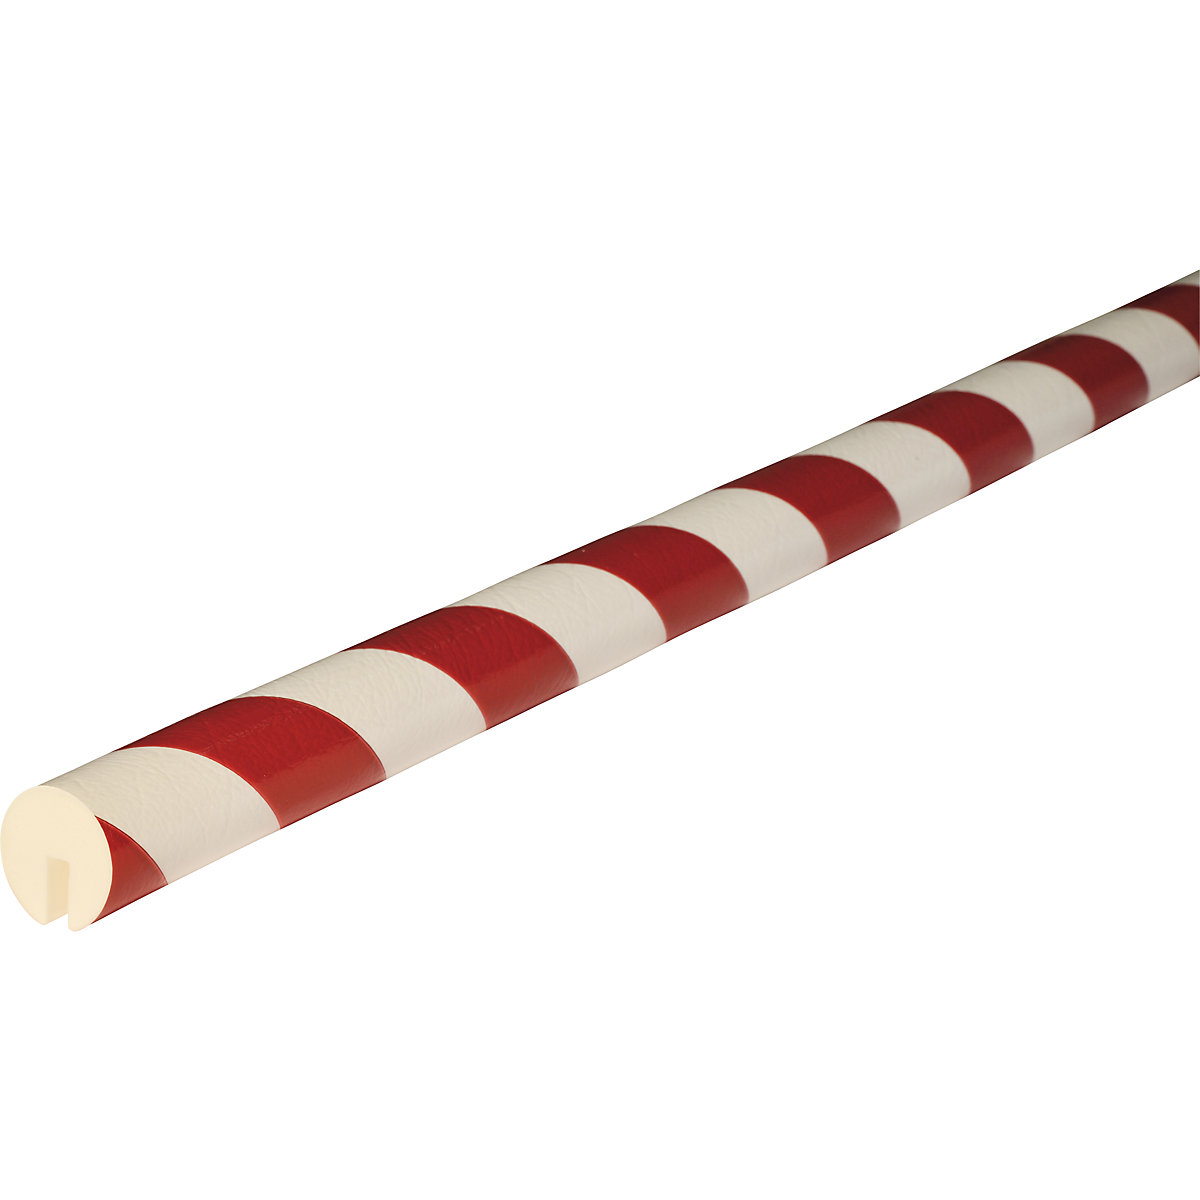 Knuffi®-randbescherming – SHG, type B, 1 rol à 5 m, rood/wit-19